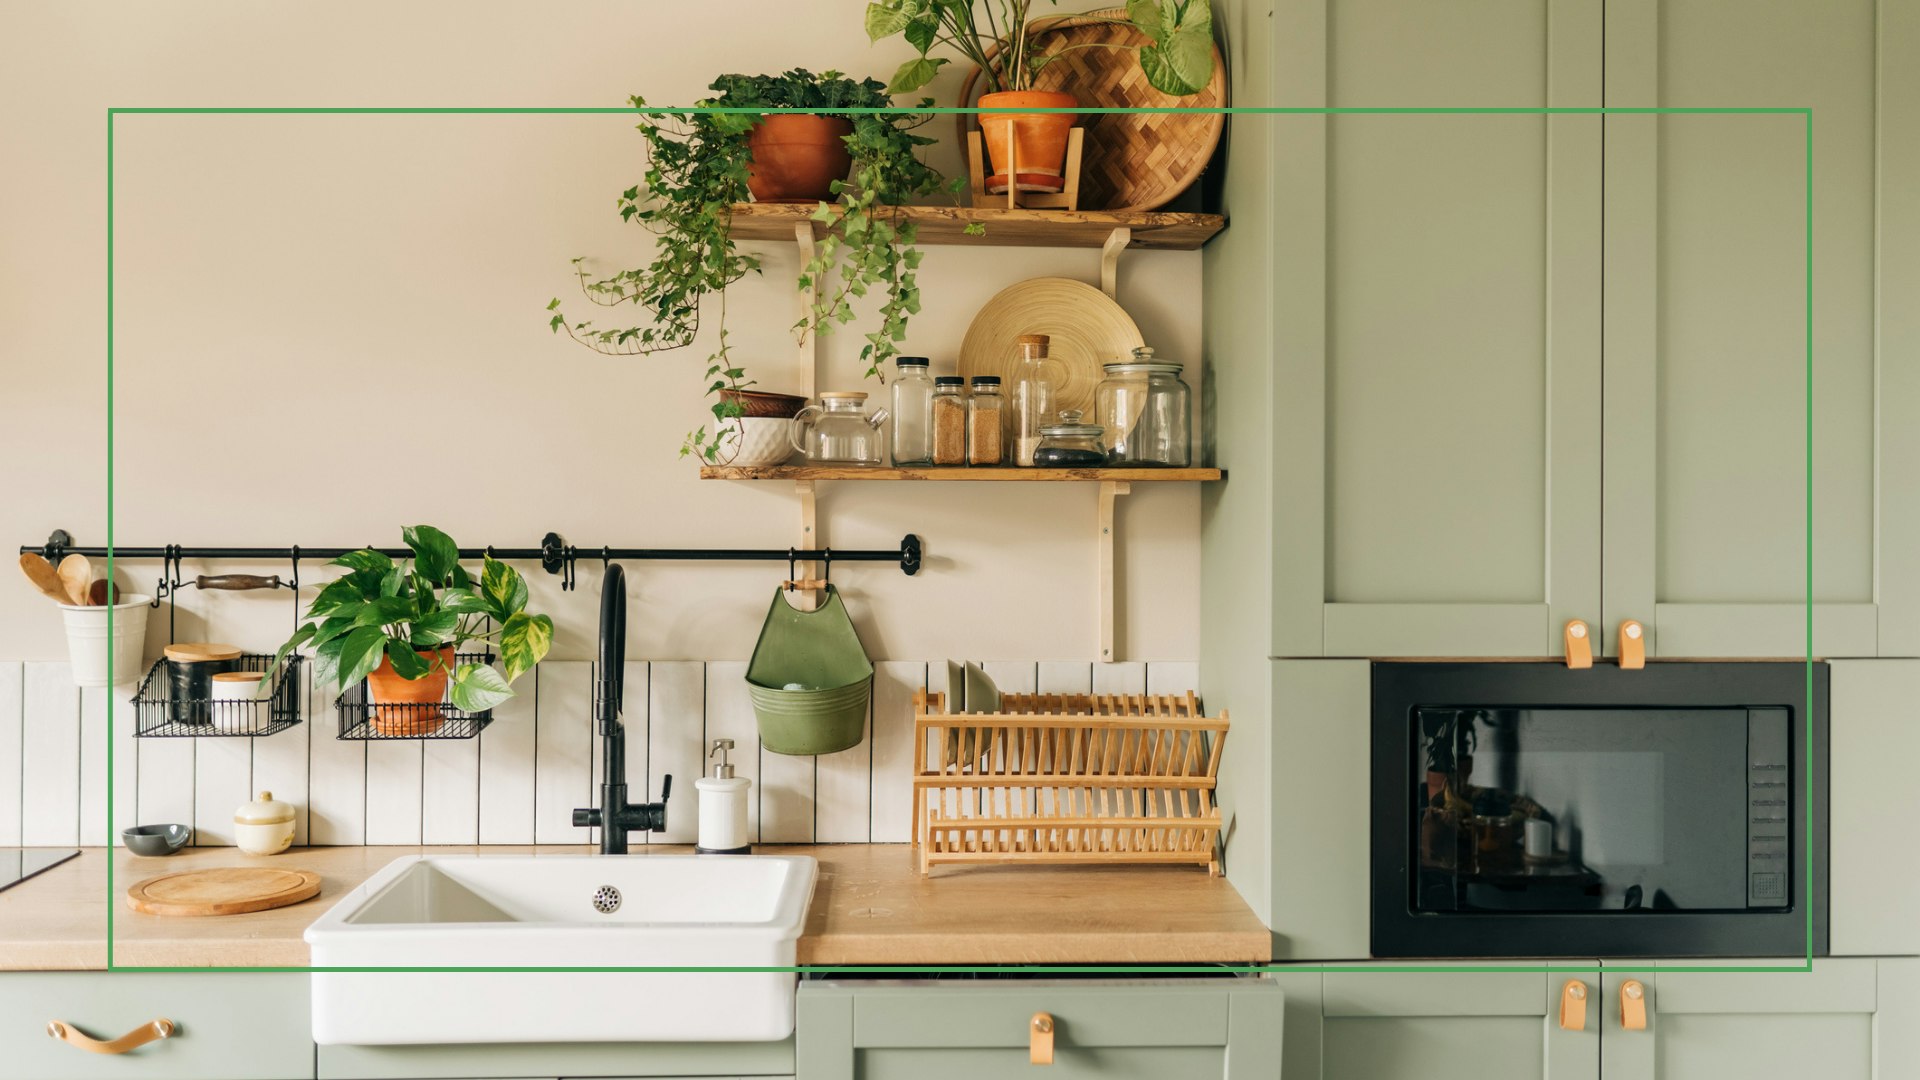 Inspiration: A Muted Sage Green Kitchen